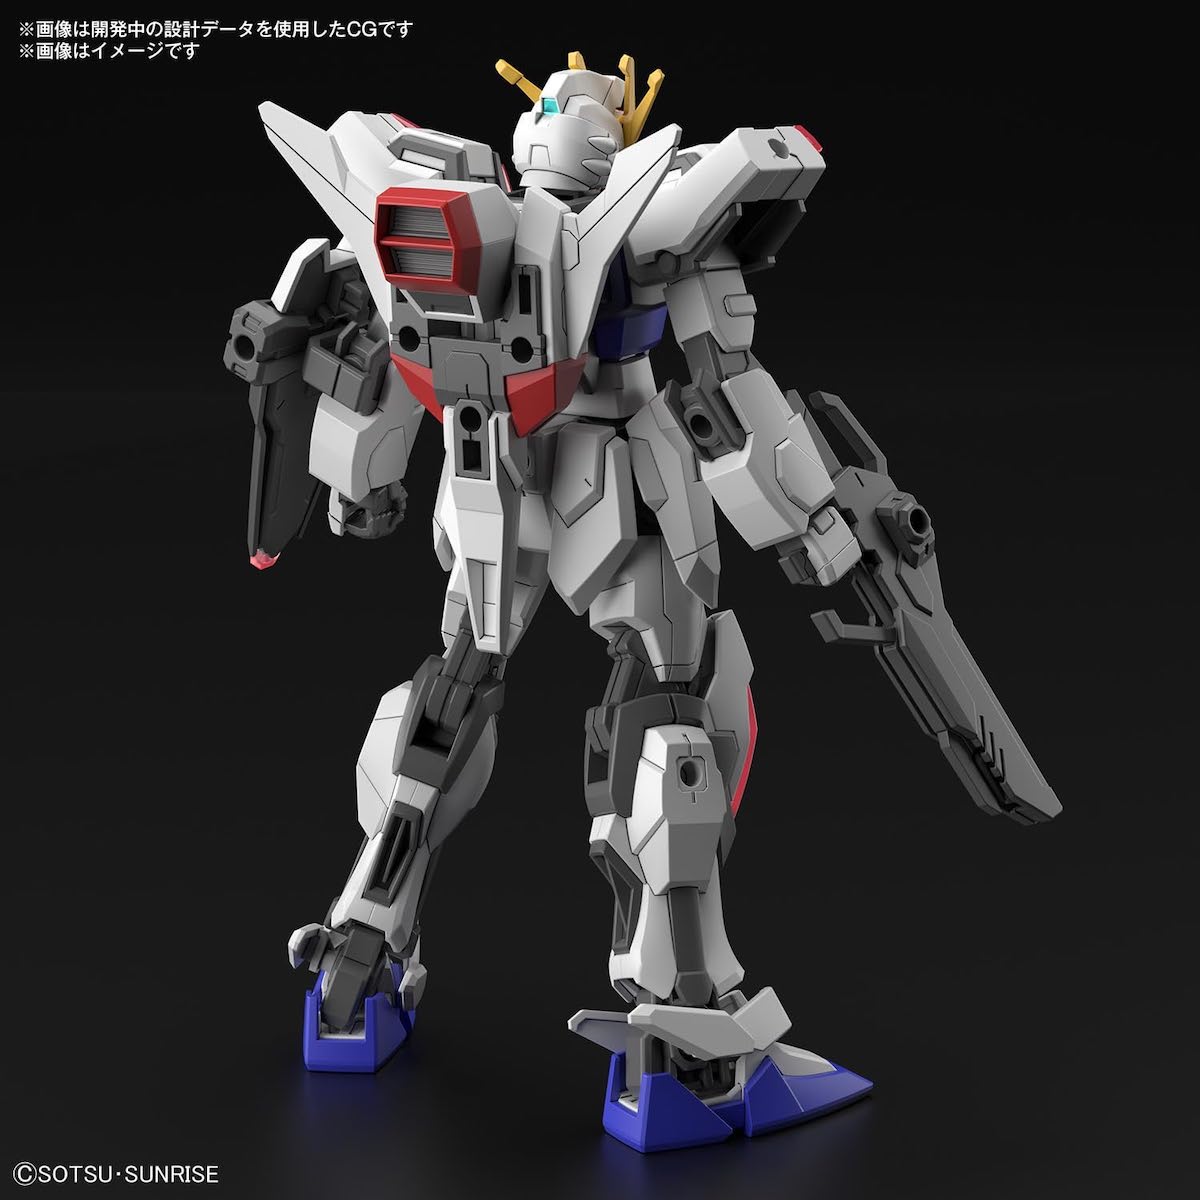 Galactic Toys 10-Piece Essential Hobby Entry Tool Set for Gundam